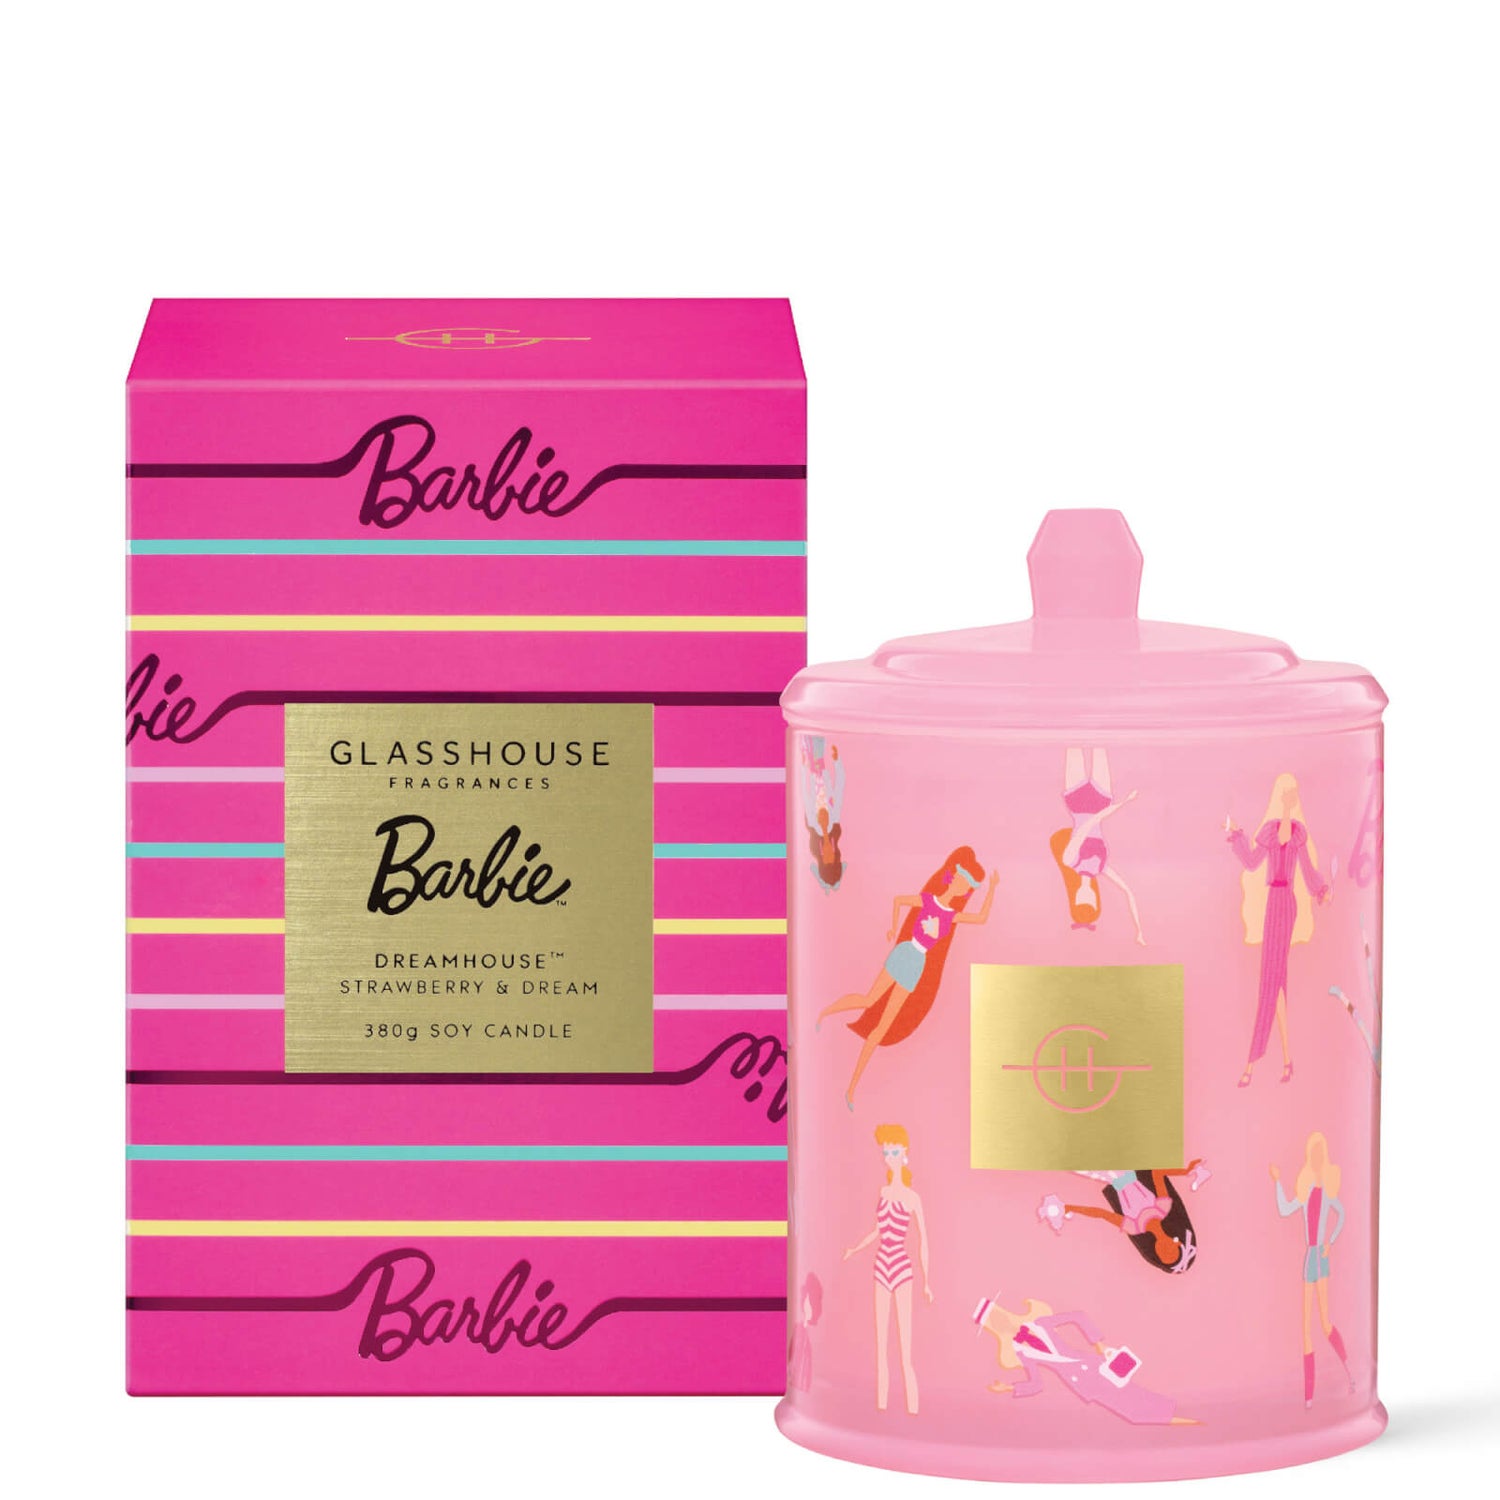 Glasshouse Fragrances Limited Edition Barbie Candle 380g